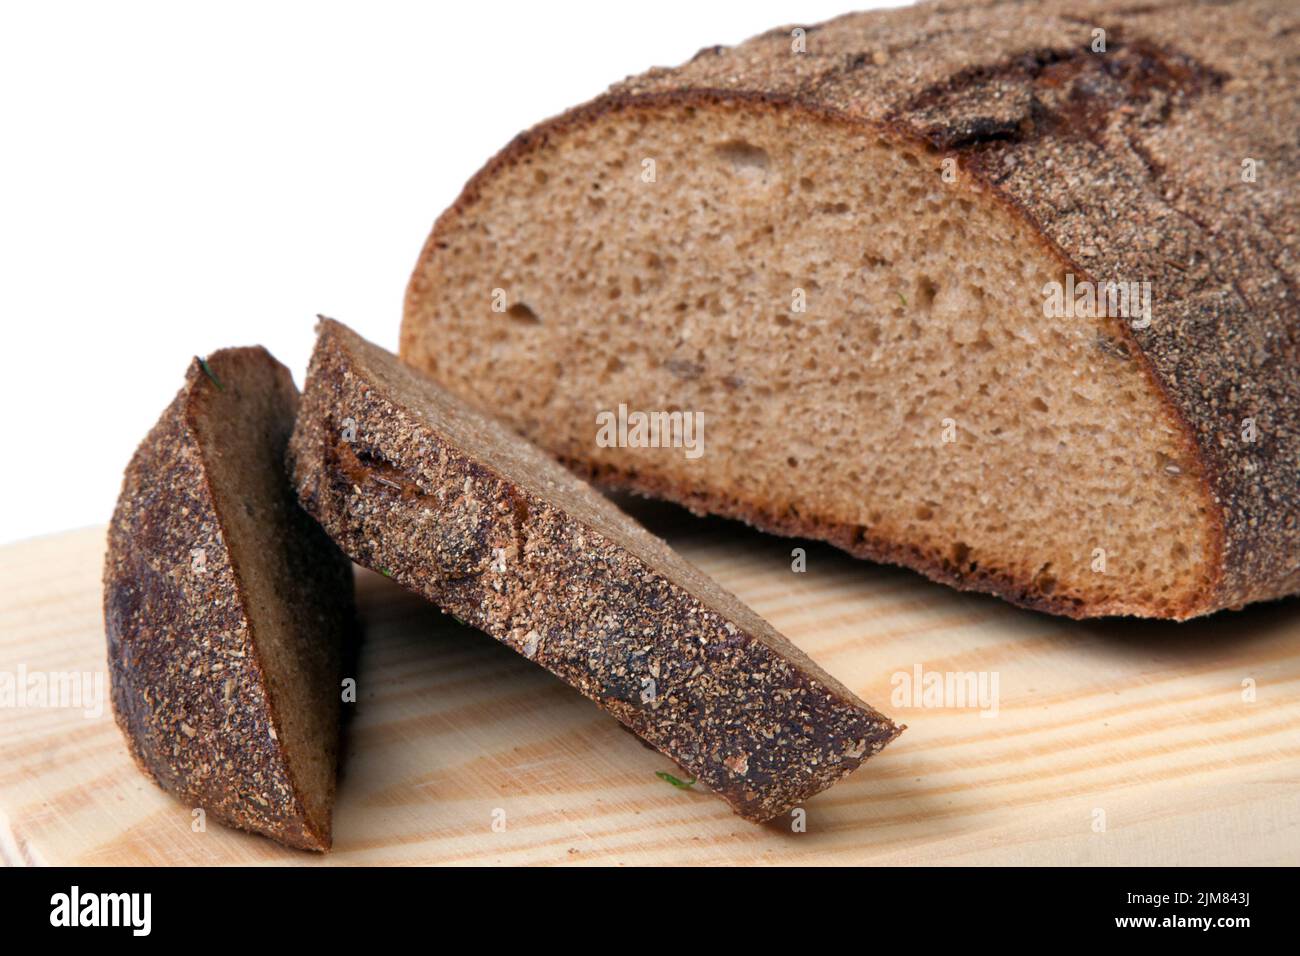 Cut bread Stock Photo